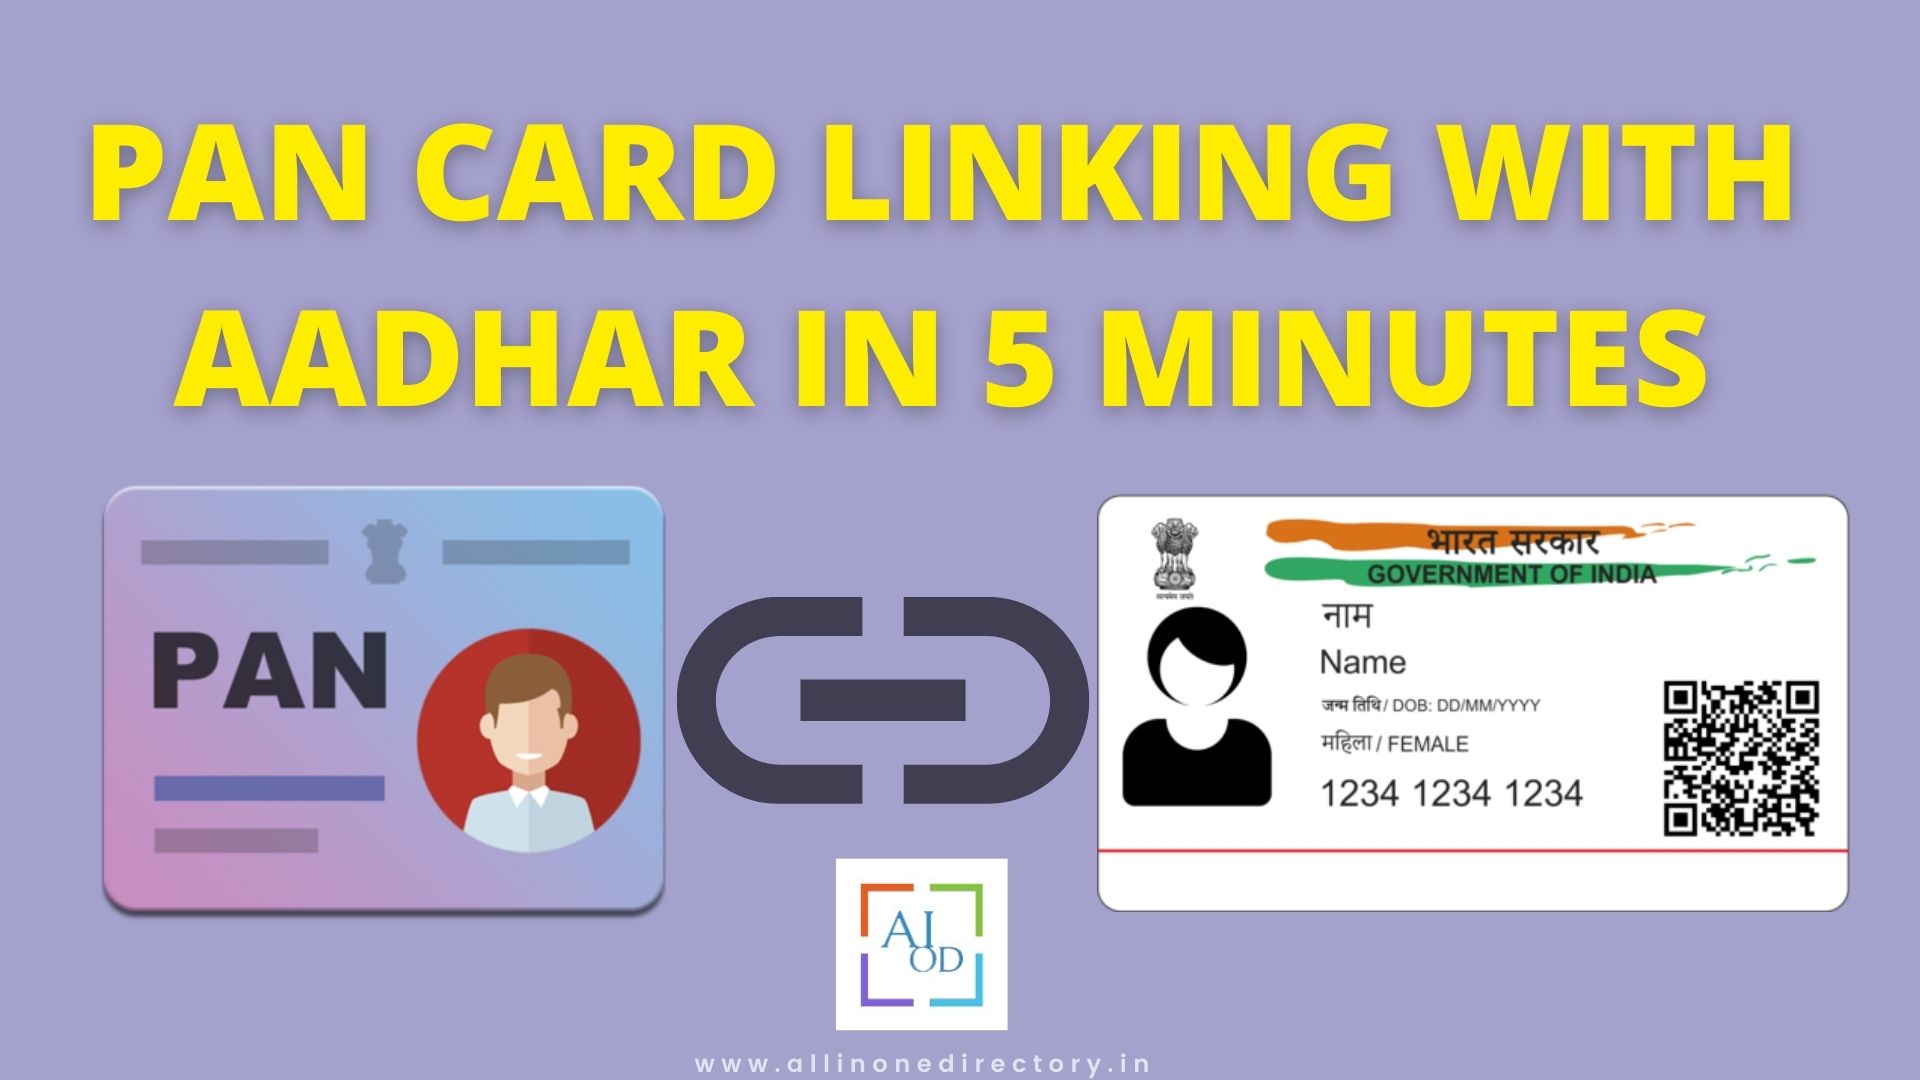 Simple Steps To Link PAN Card With Aadhar Card